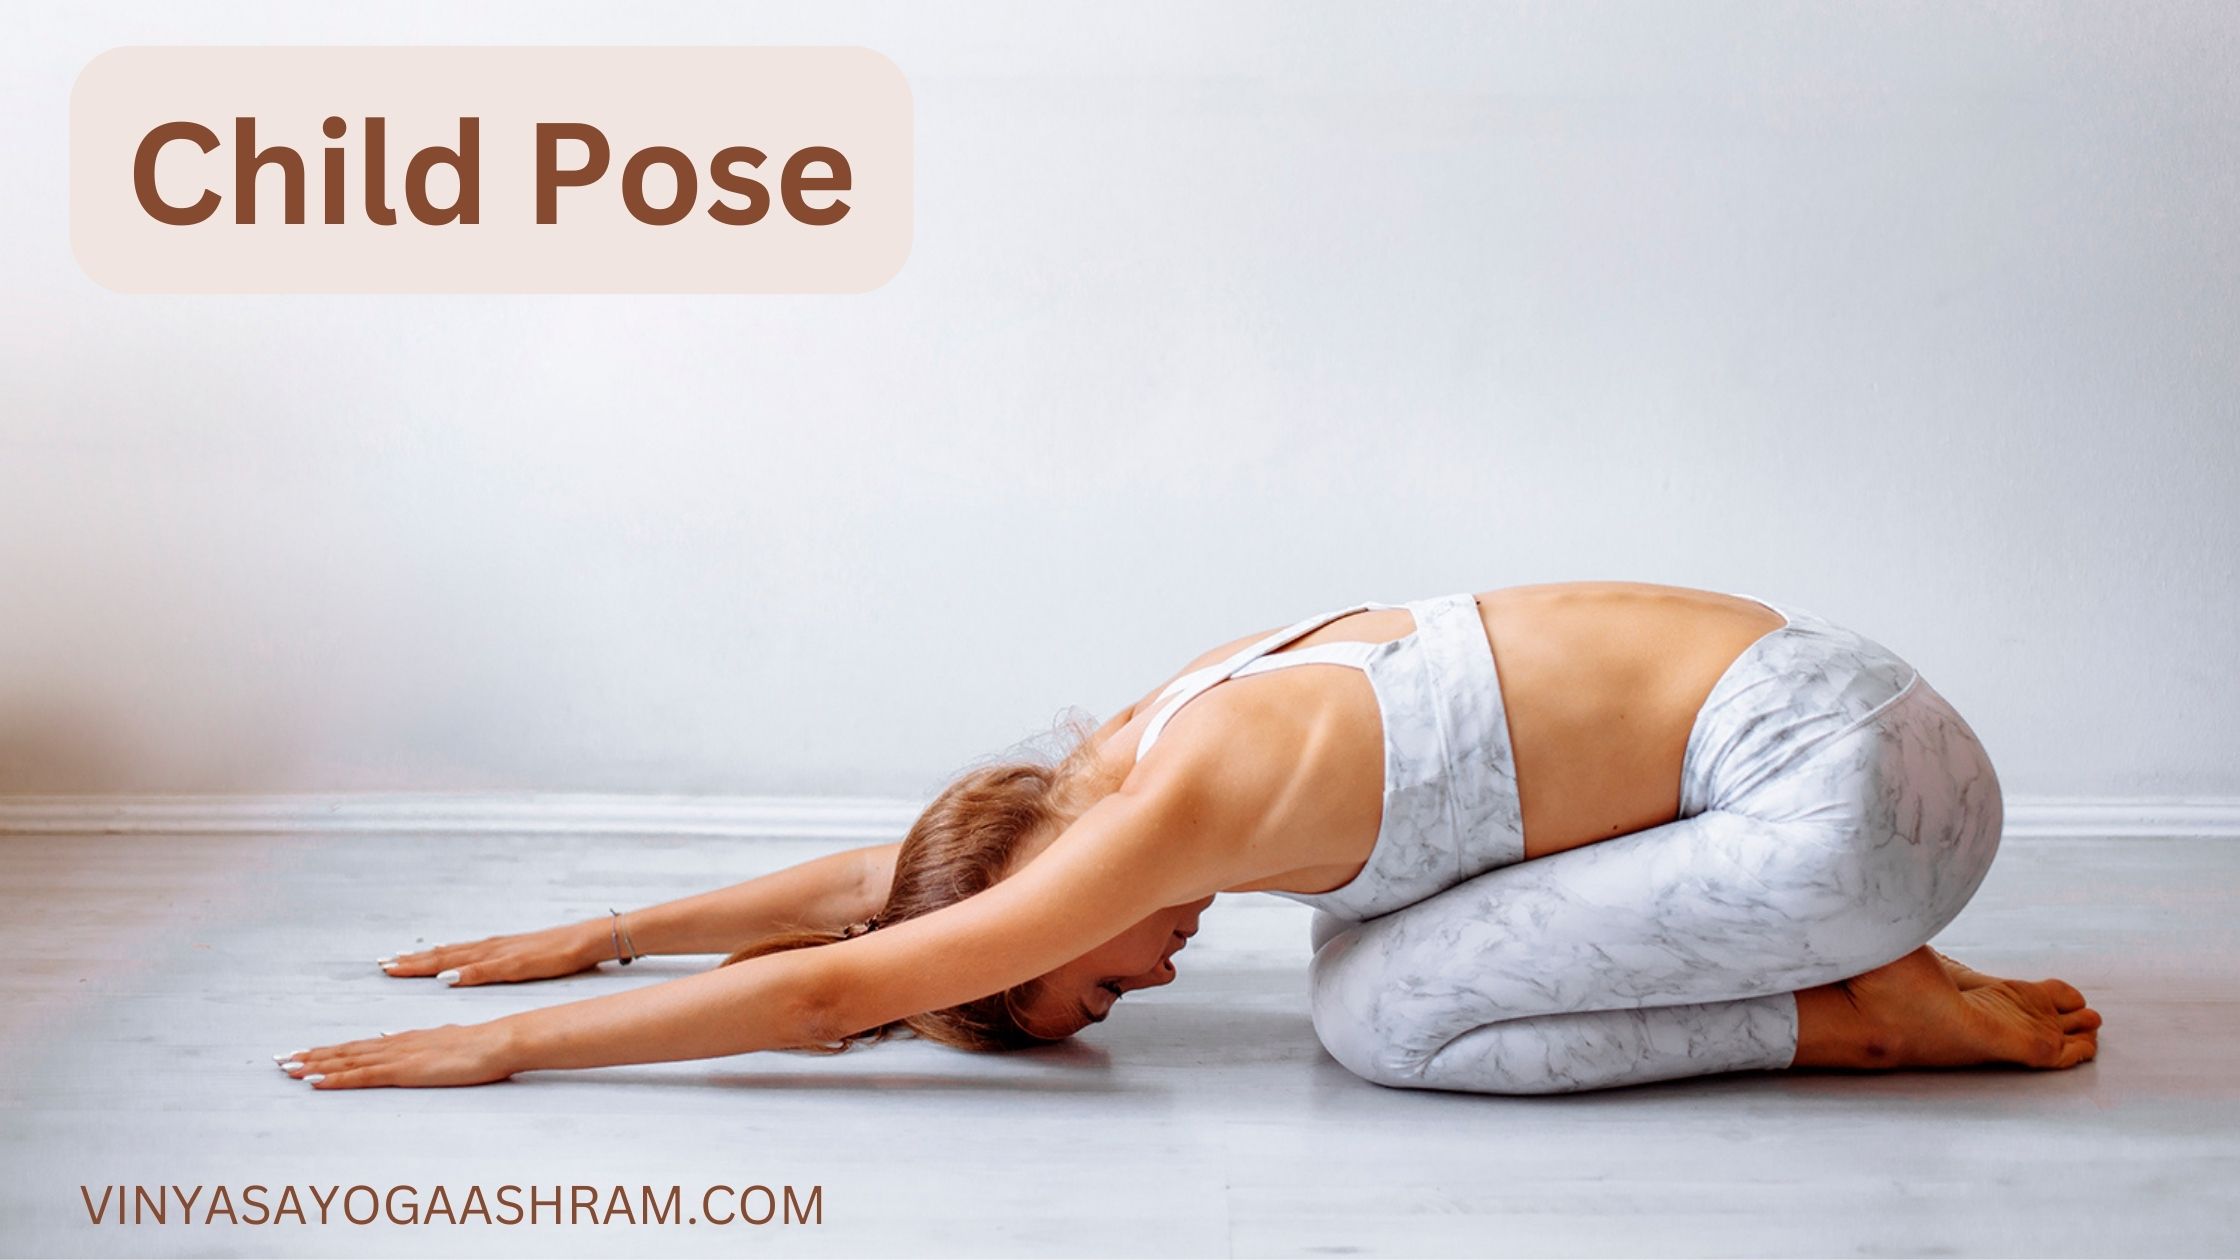 Yoga for Morning Sickness: 5 Prenatal Yoga Poses | YouAligned